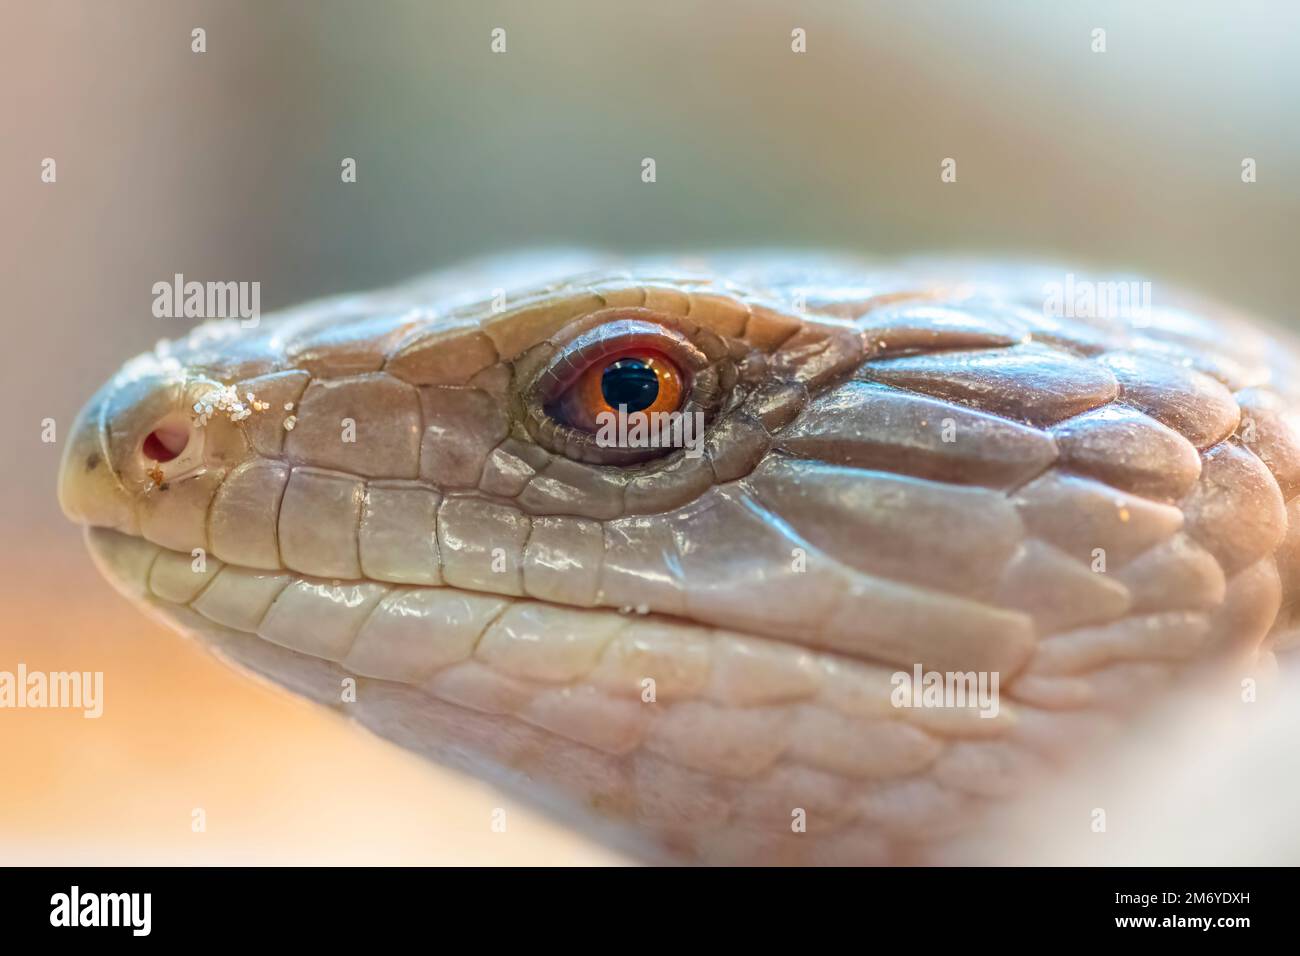 Close up portrait of head of Eastern blue-tongue lizard (Tiliqua scincoides). Stock Photo